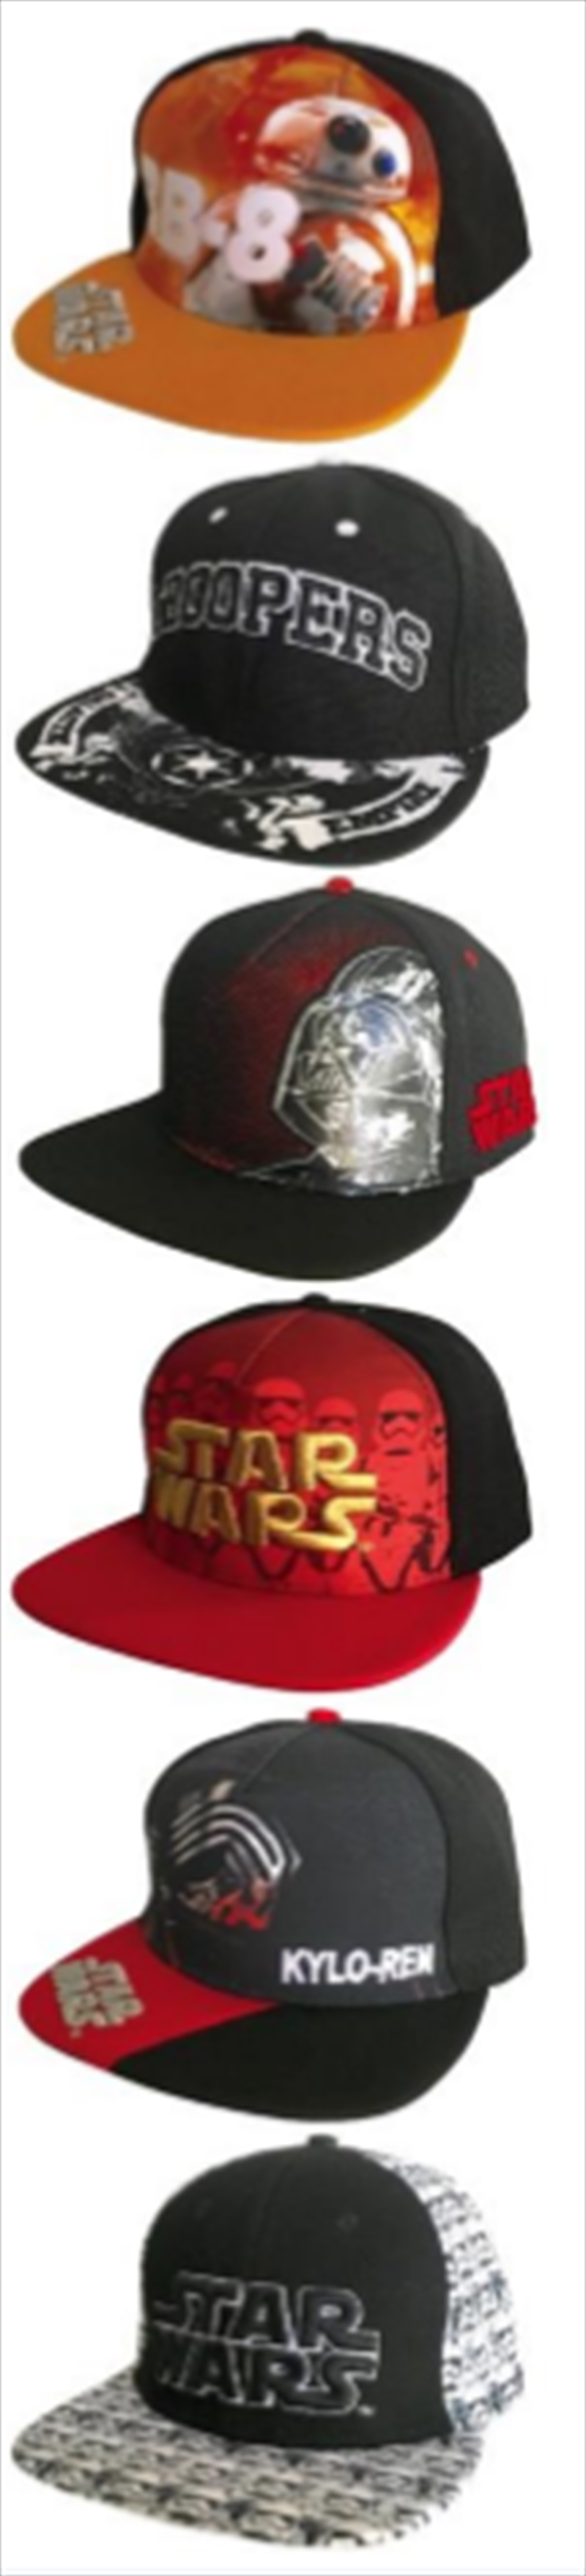 Star Wars Assorted Cap/Product Detail/Caps & Hats